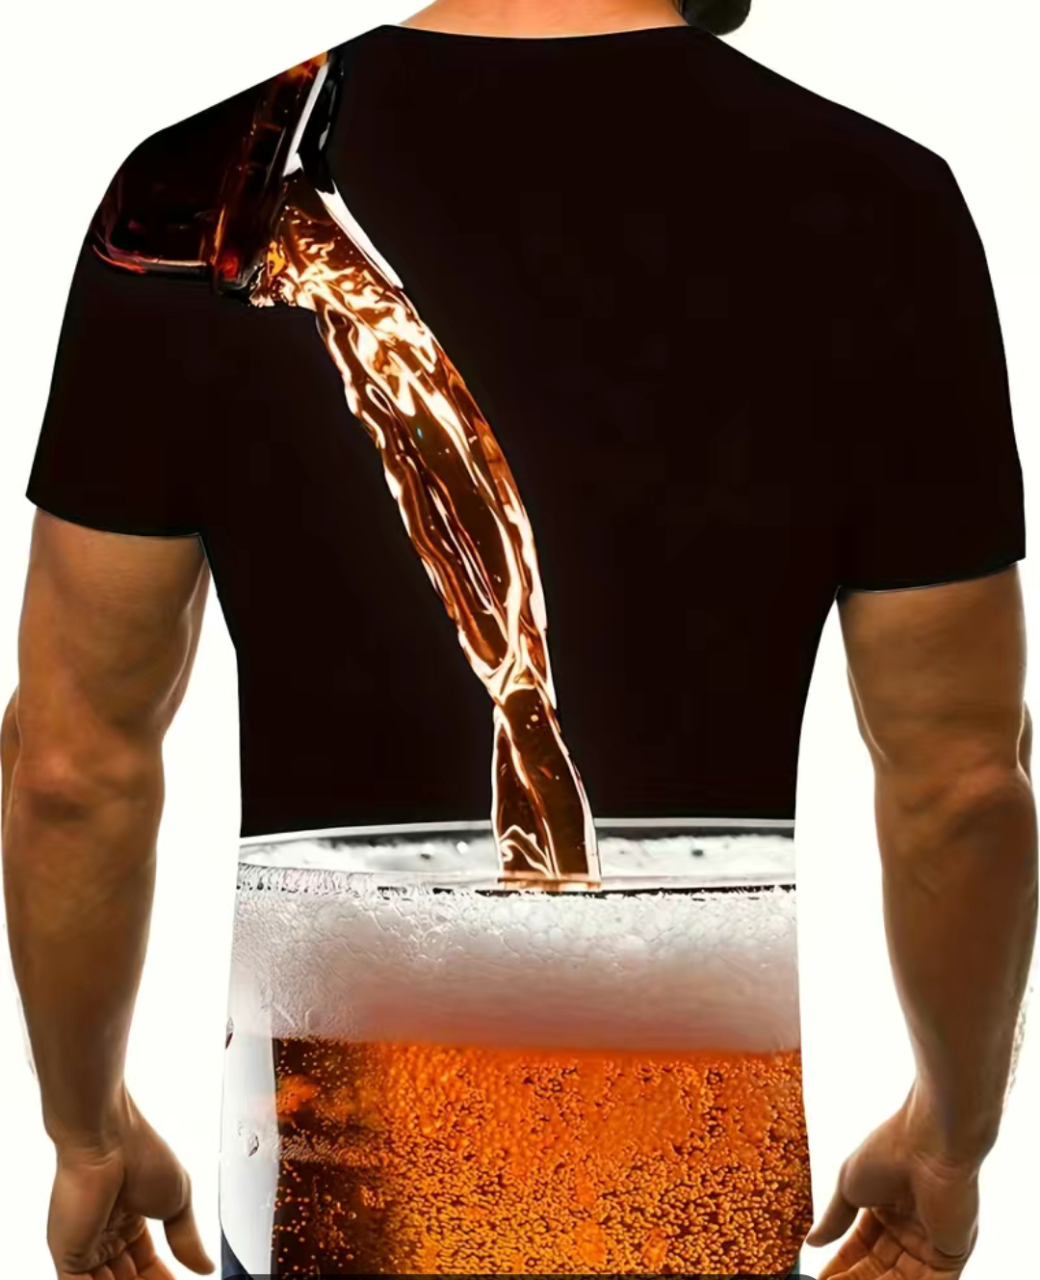 Tričko - Půllitr pivo